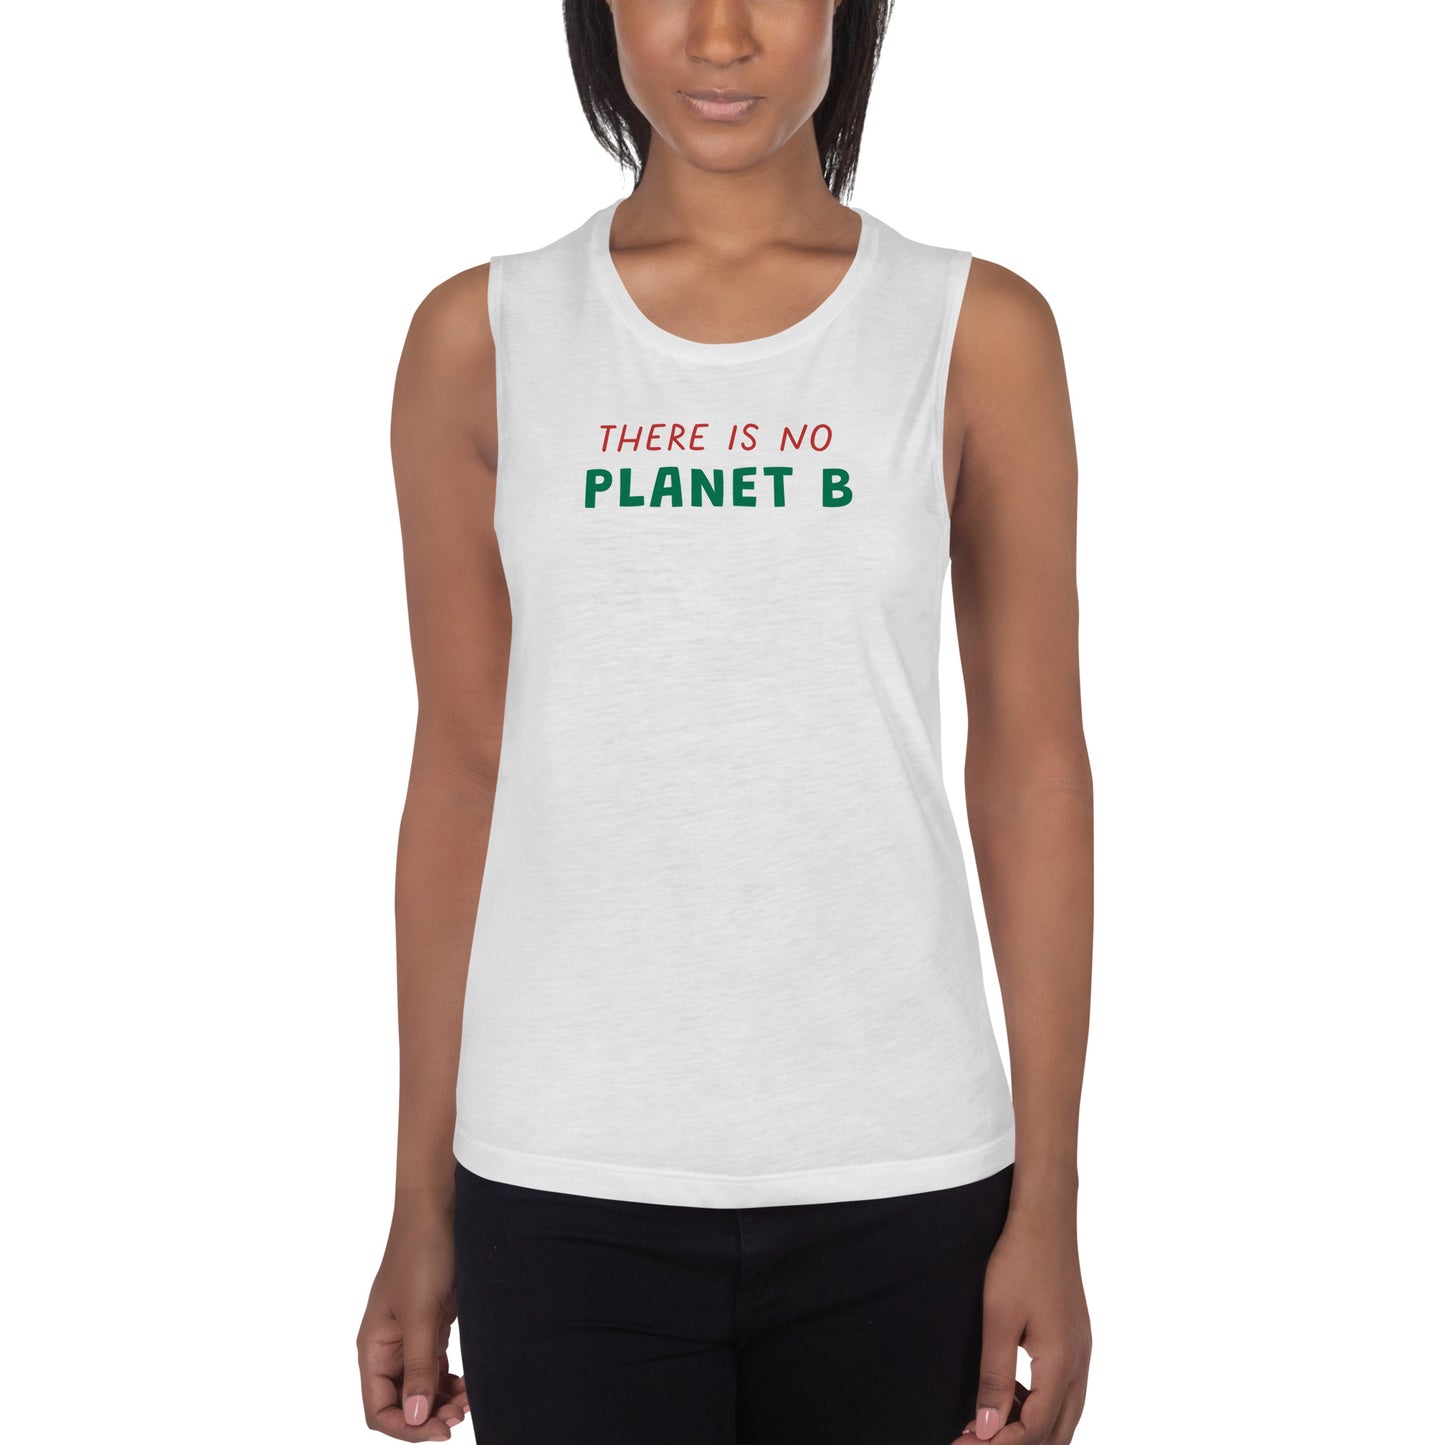 "No planet b" women's tank top